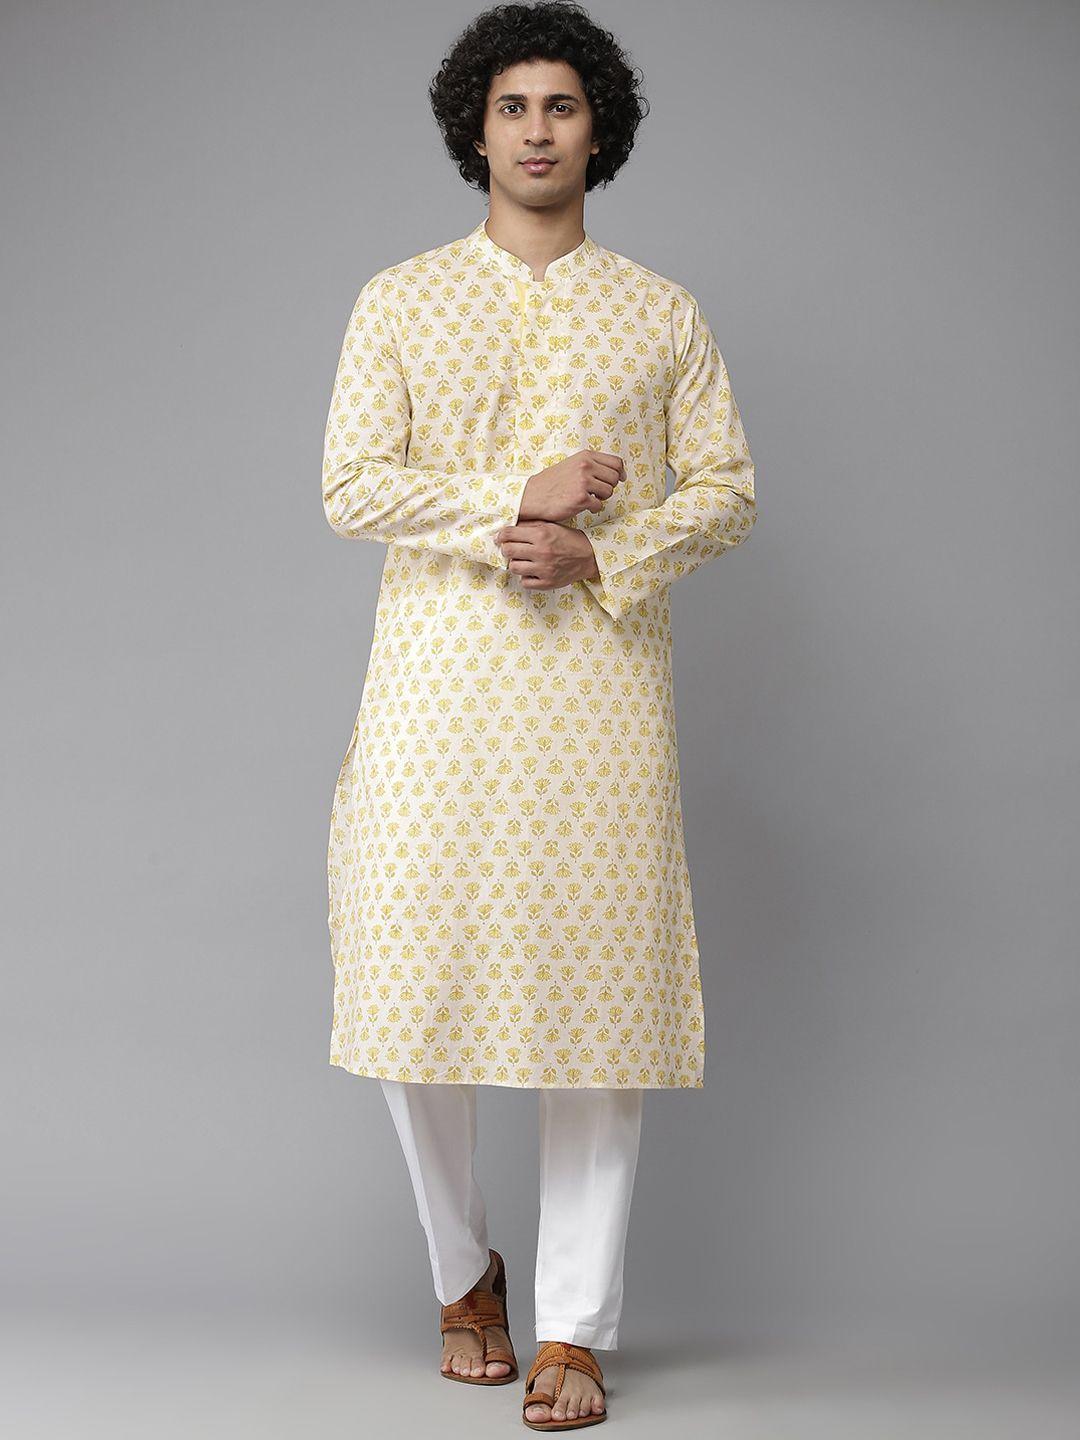 see-designs-men-yellow-ethnic-motifs-printed-pure-cotton-kurta